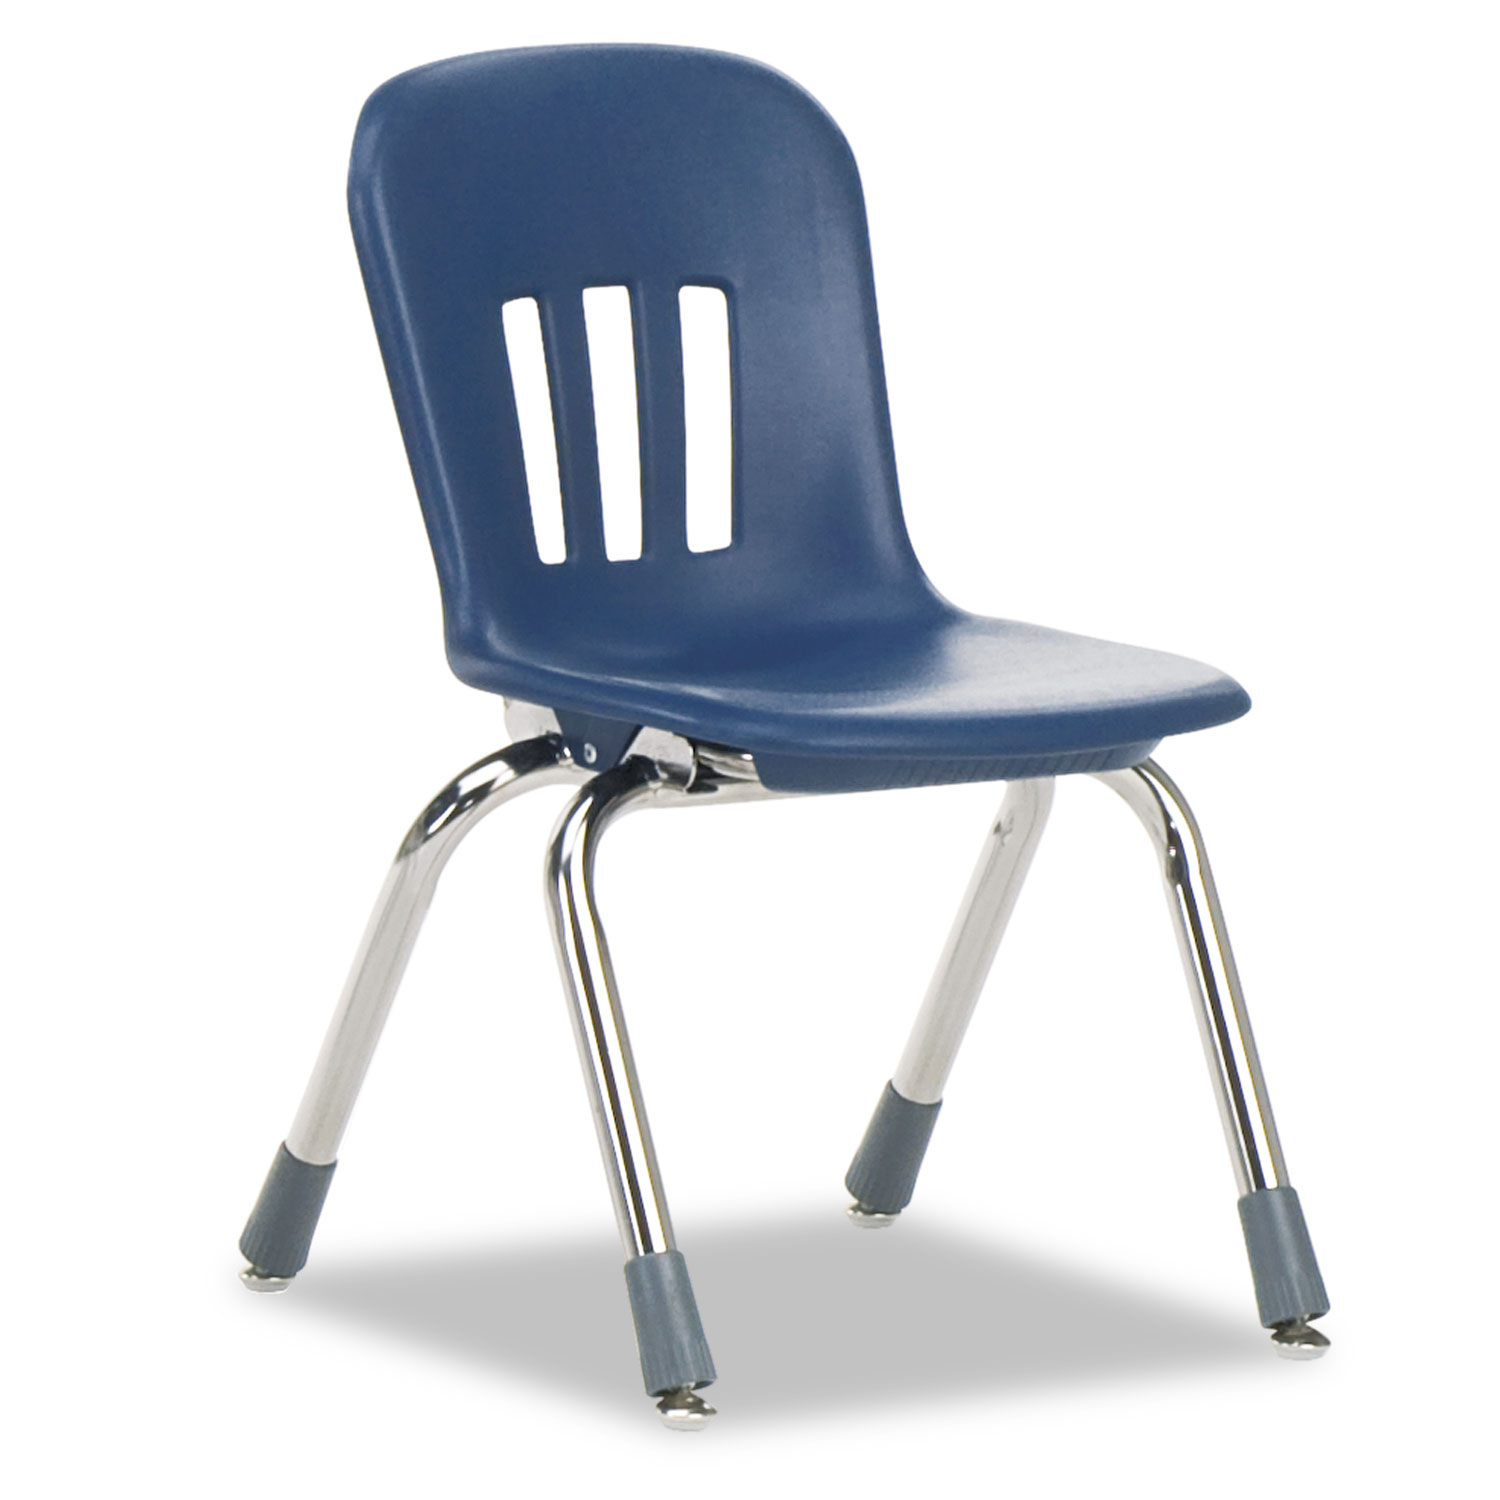 Metaphor Series Classroom Chair, 12-1/2 Seat Height, Navy Blue/Chrome, 5/Carton